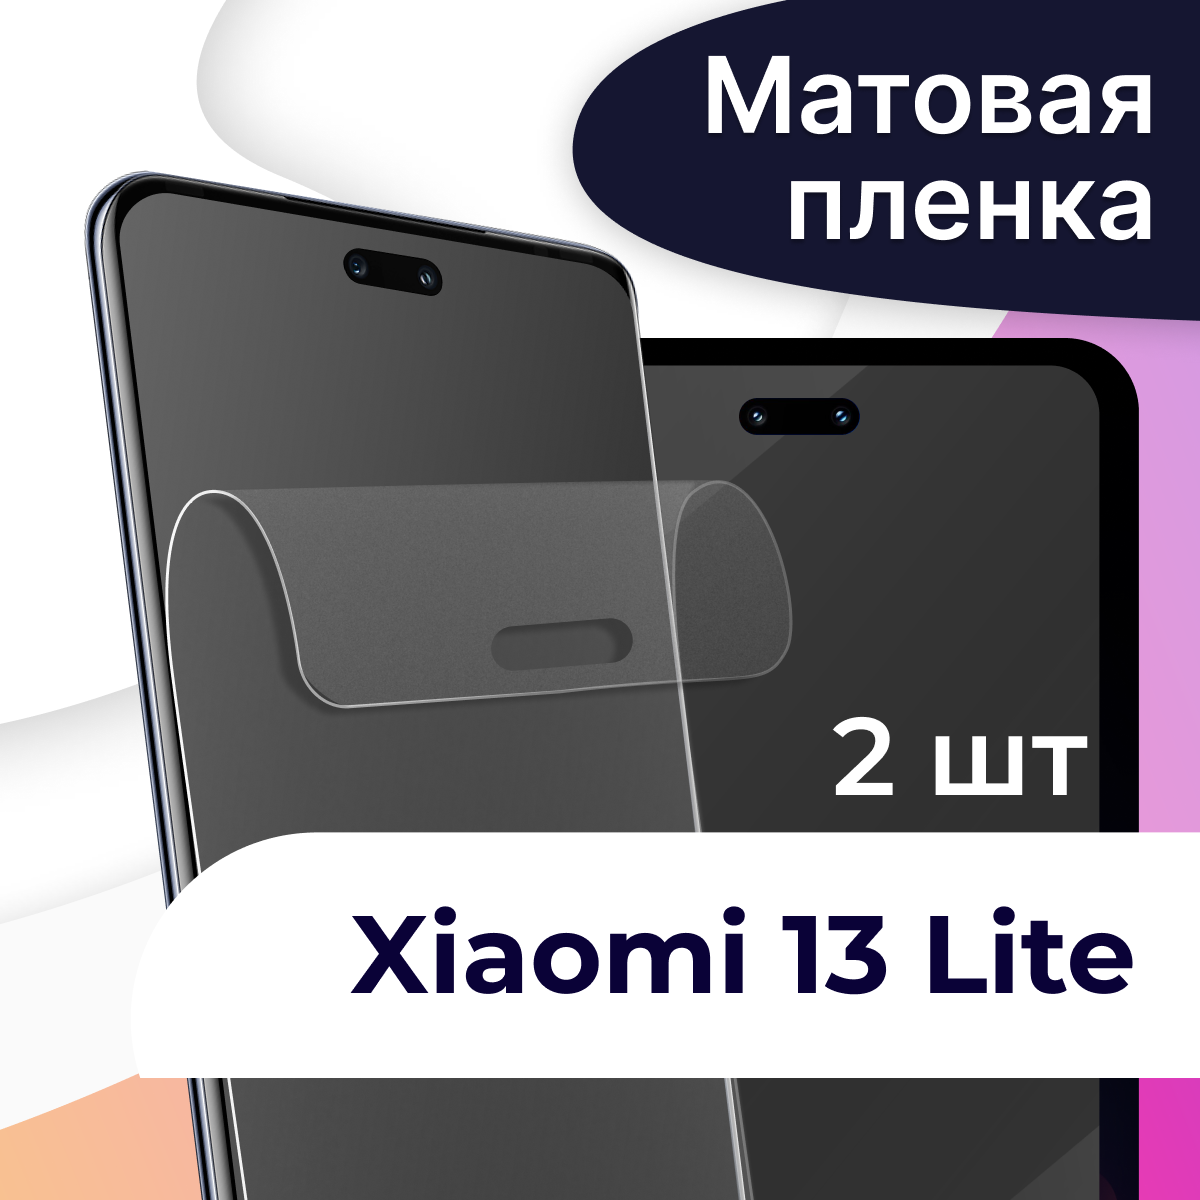 Матовая пленка на телефон Xiaomi 13 Lite / Гидрогелевая противоударная пленка для смартфона Сяоми 13 Лайт / Защитная пленка